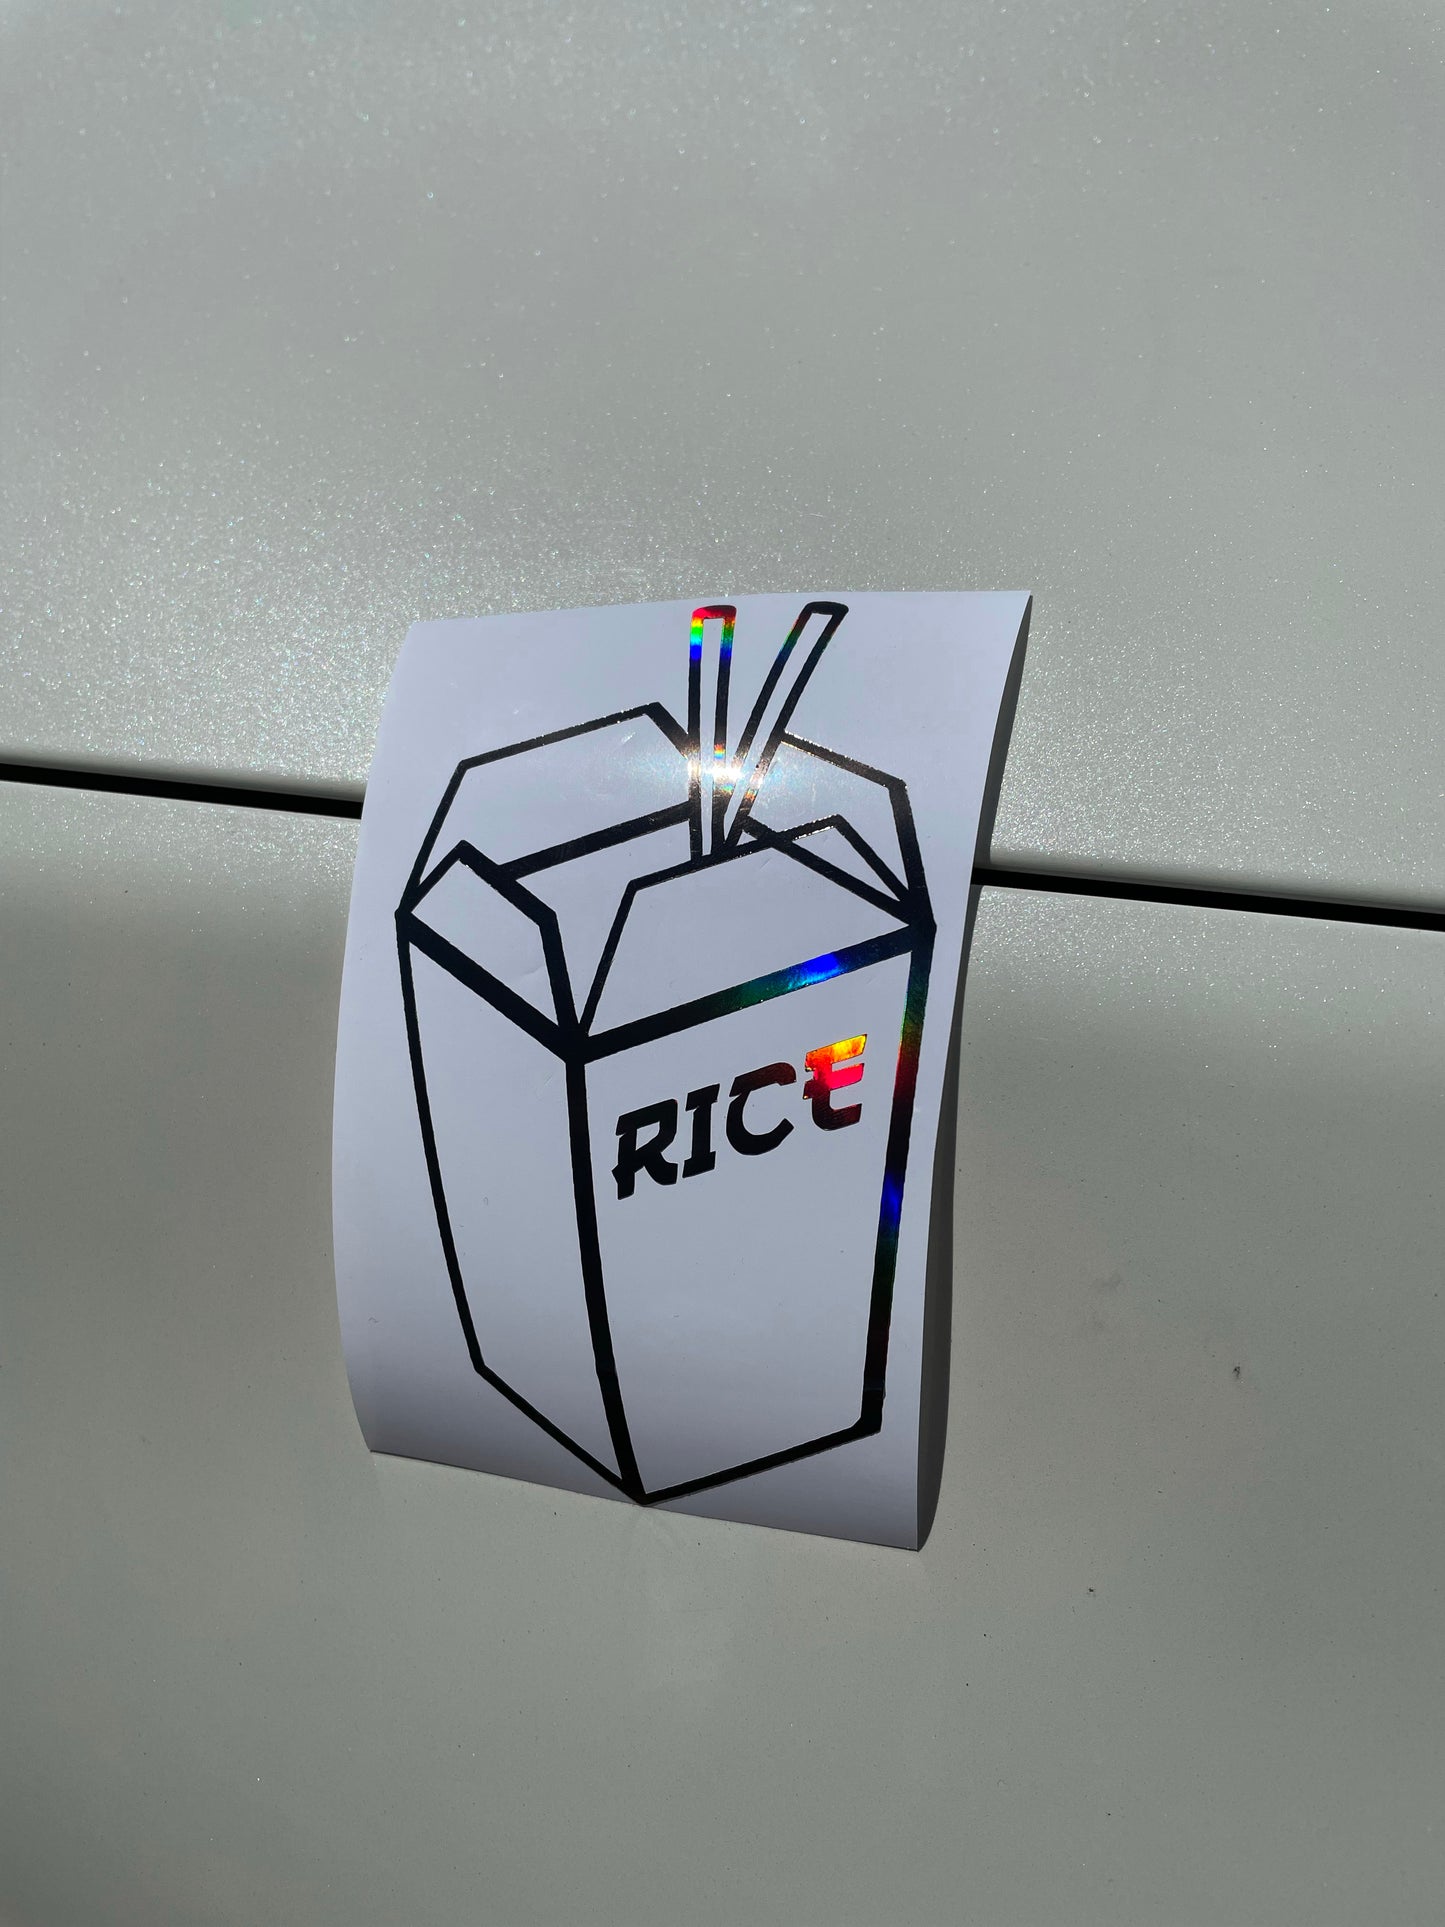 Rice box